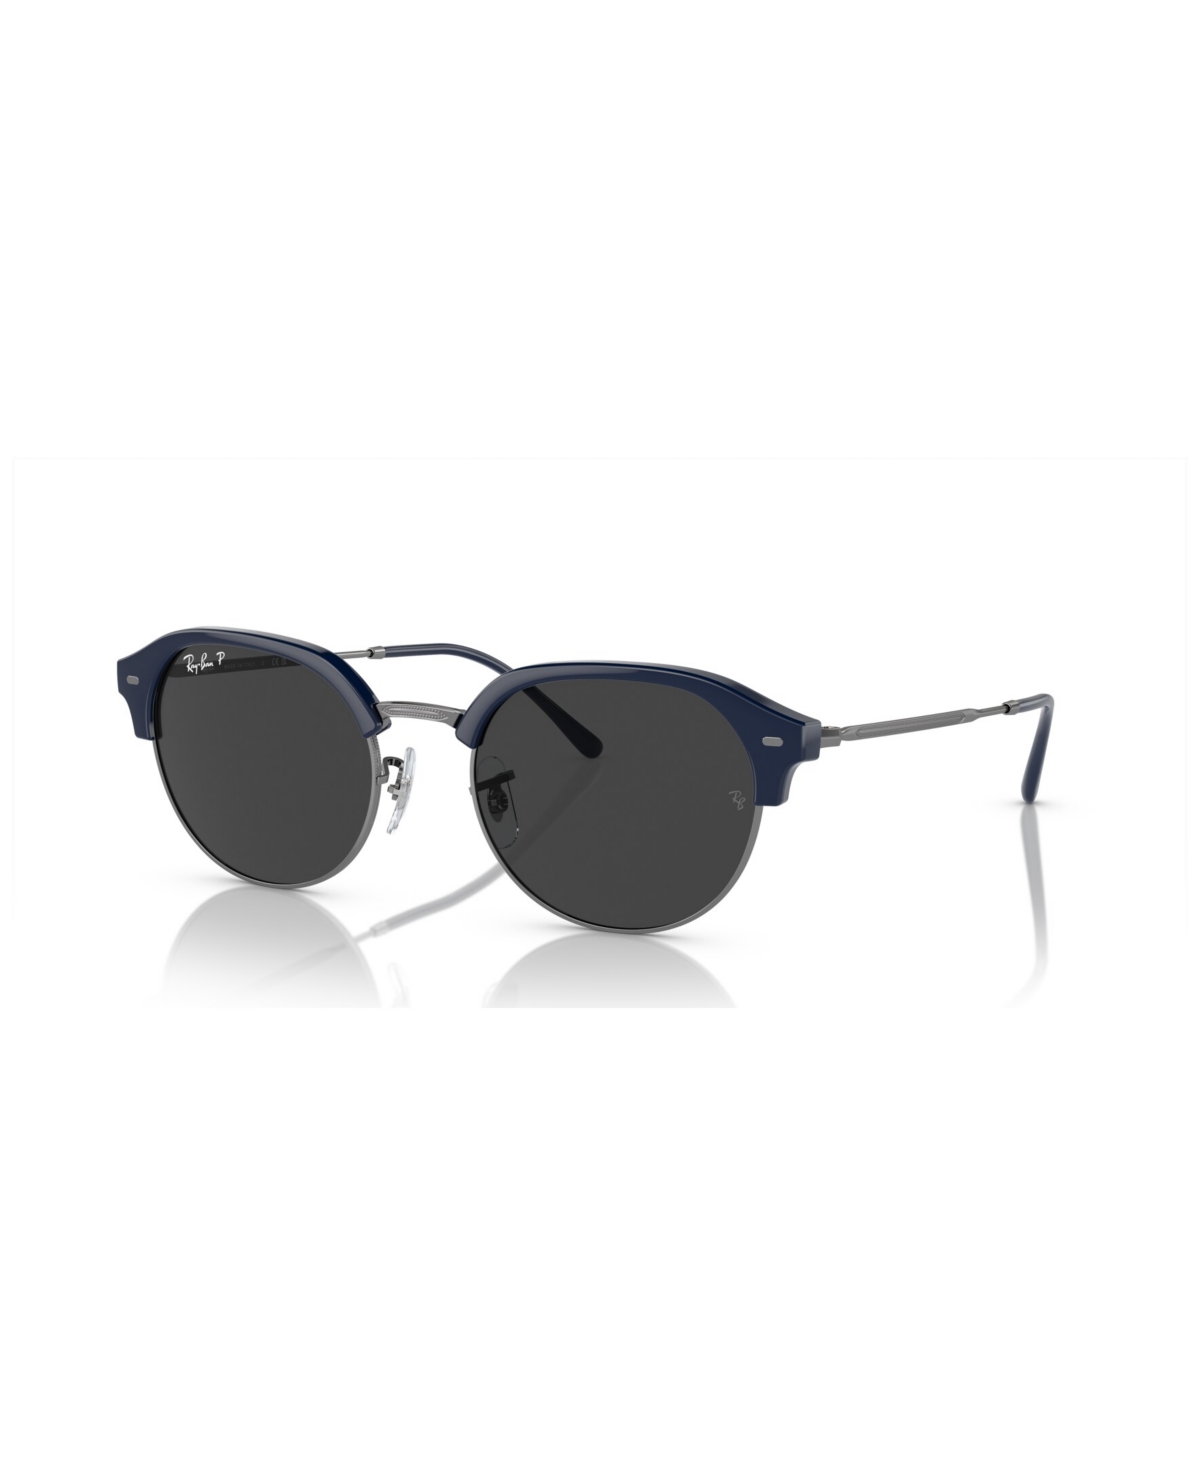 Ray Ban Unisex Polarized Sunglasses, Rb4429 In Blue On Gunmetal